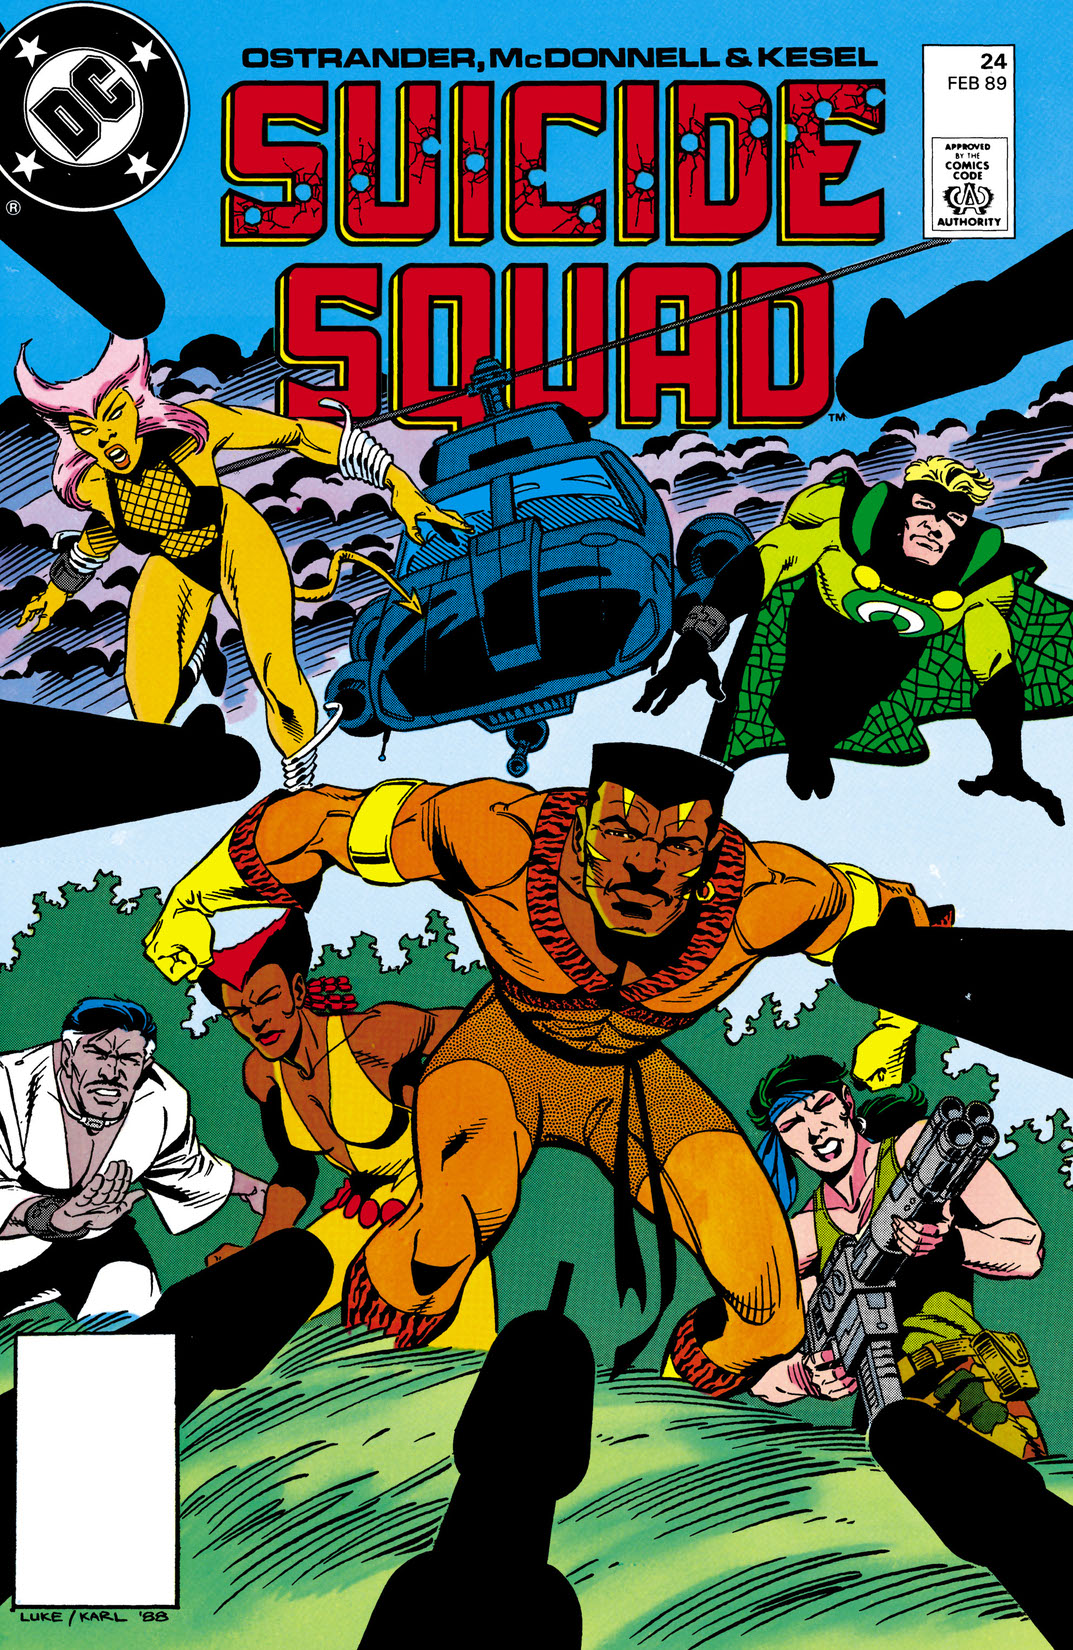 Suicide Squad (1987-) #24 preview images